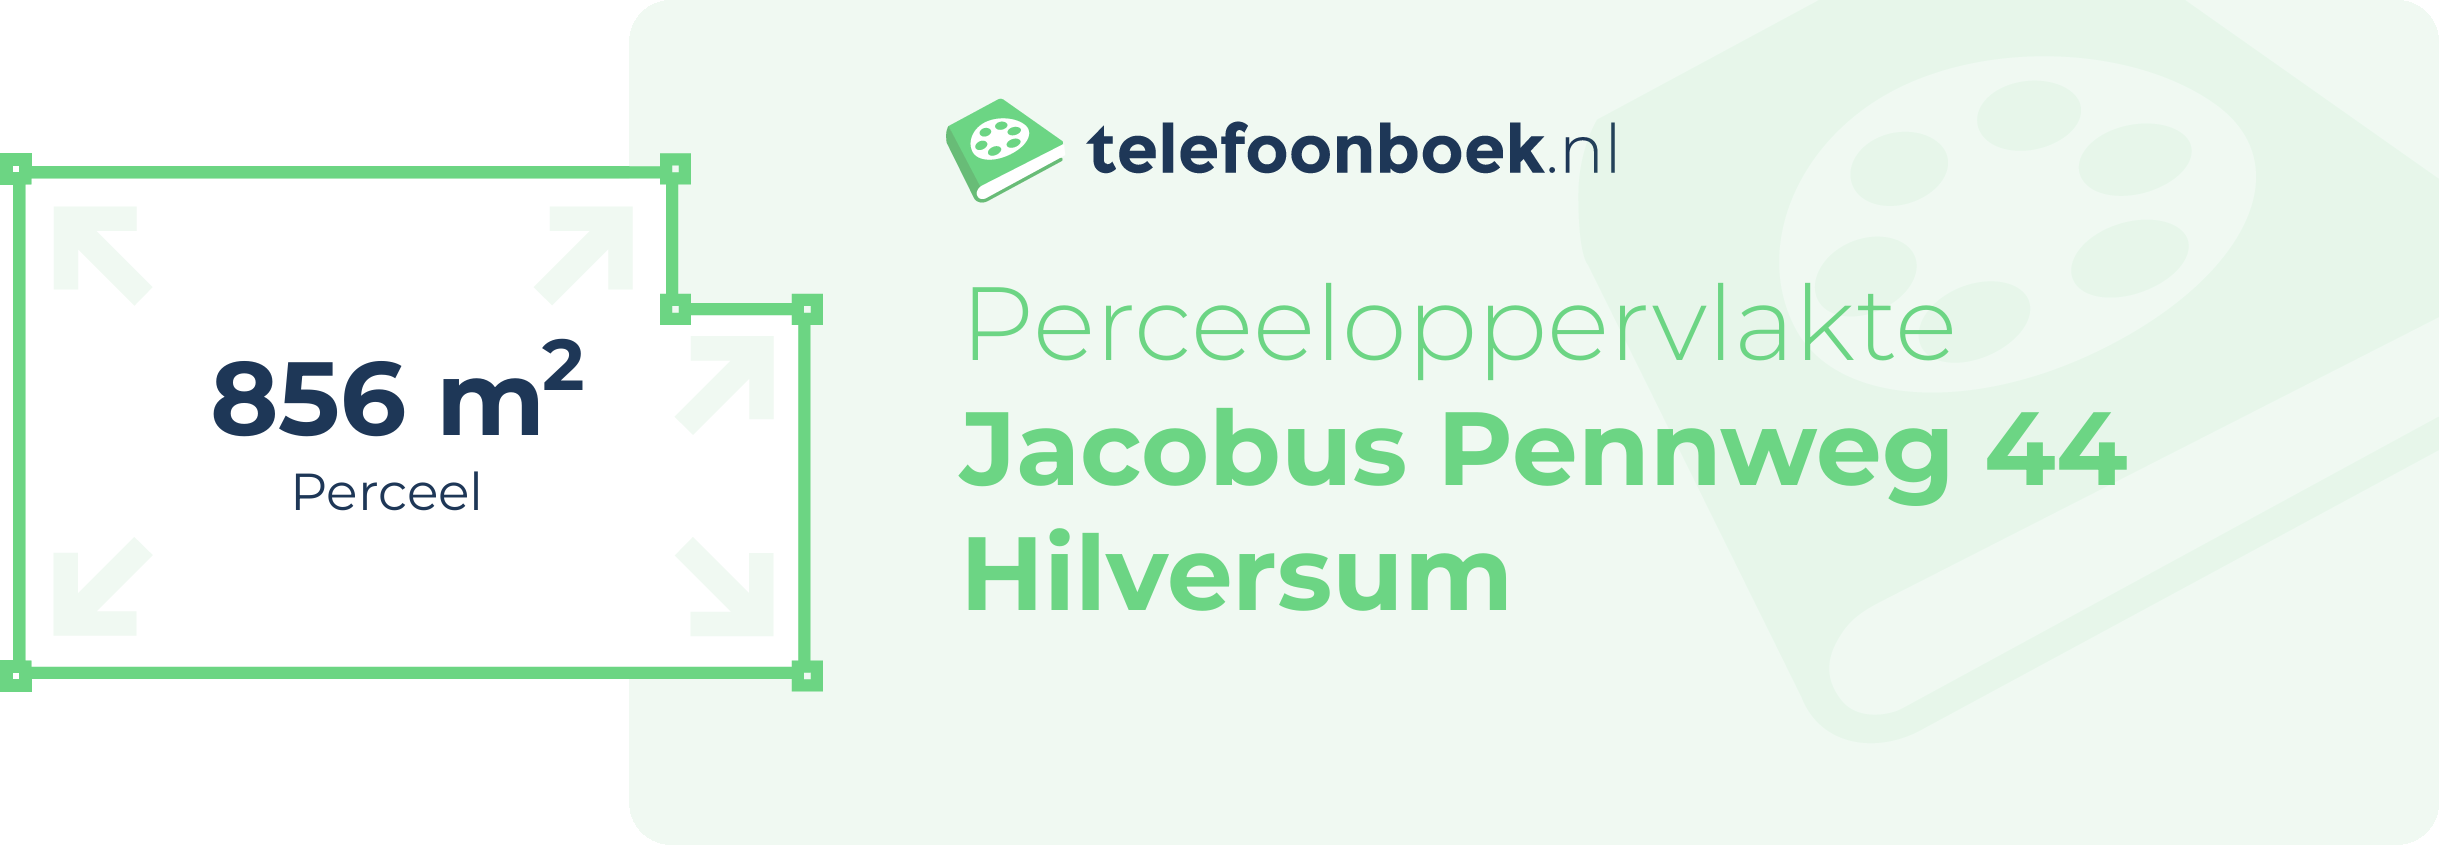 Perceeloppervlakte Jacobus Pennweg 44 Hilversum